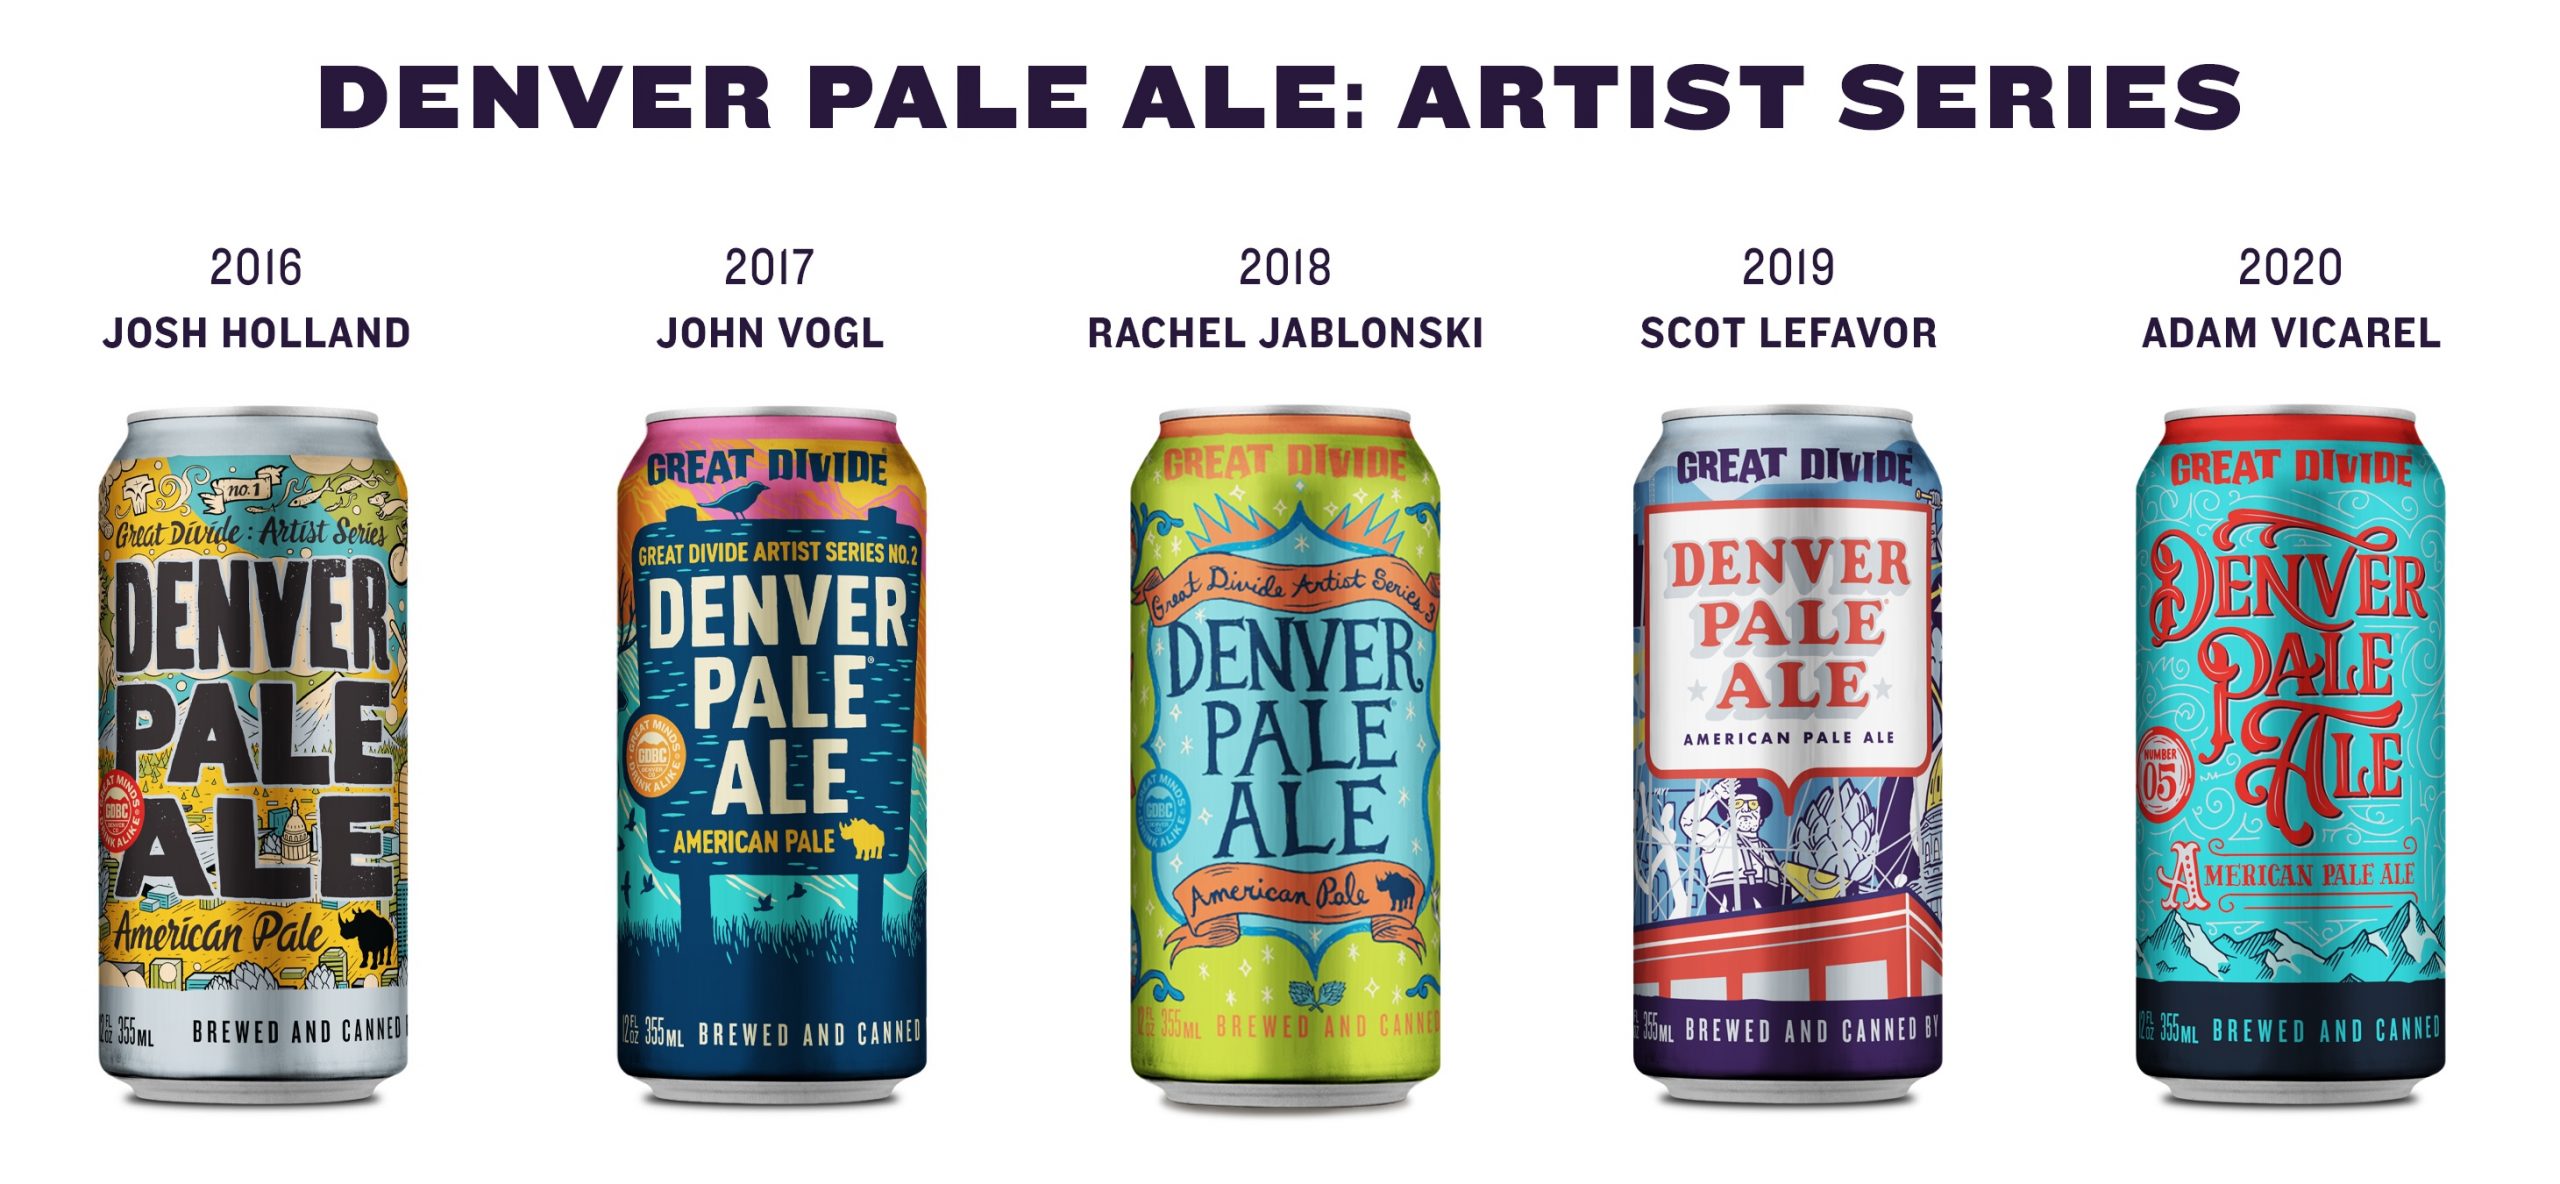 Denver Pale Ale: Artist Series Adam Vicarel